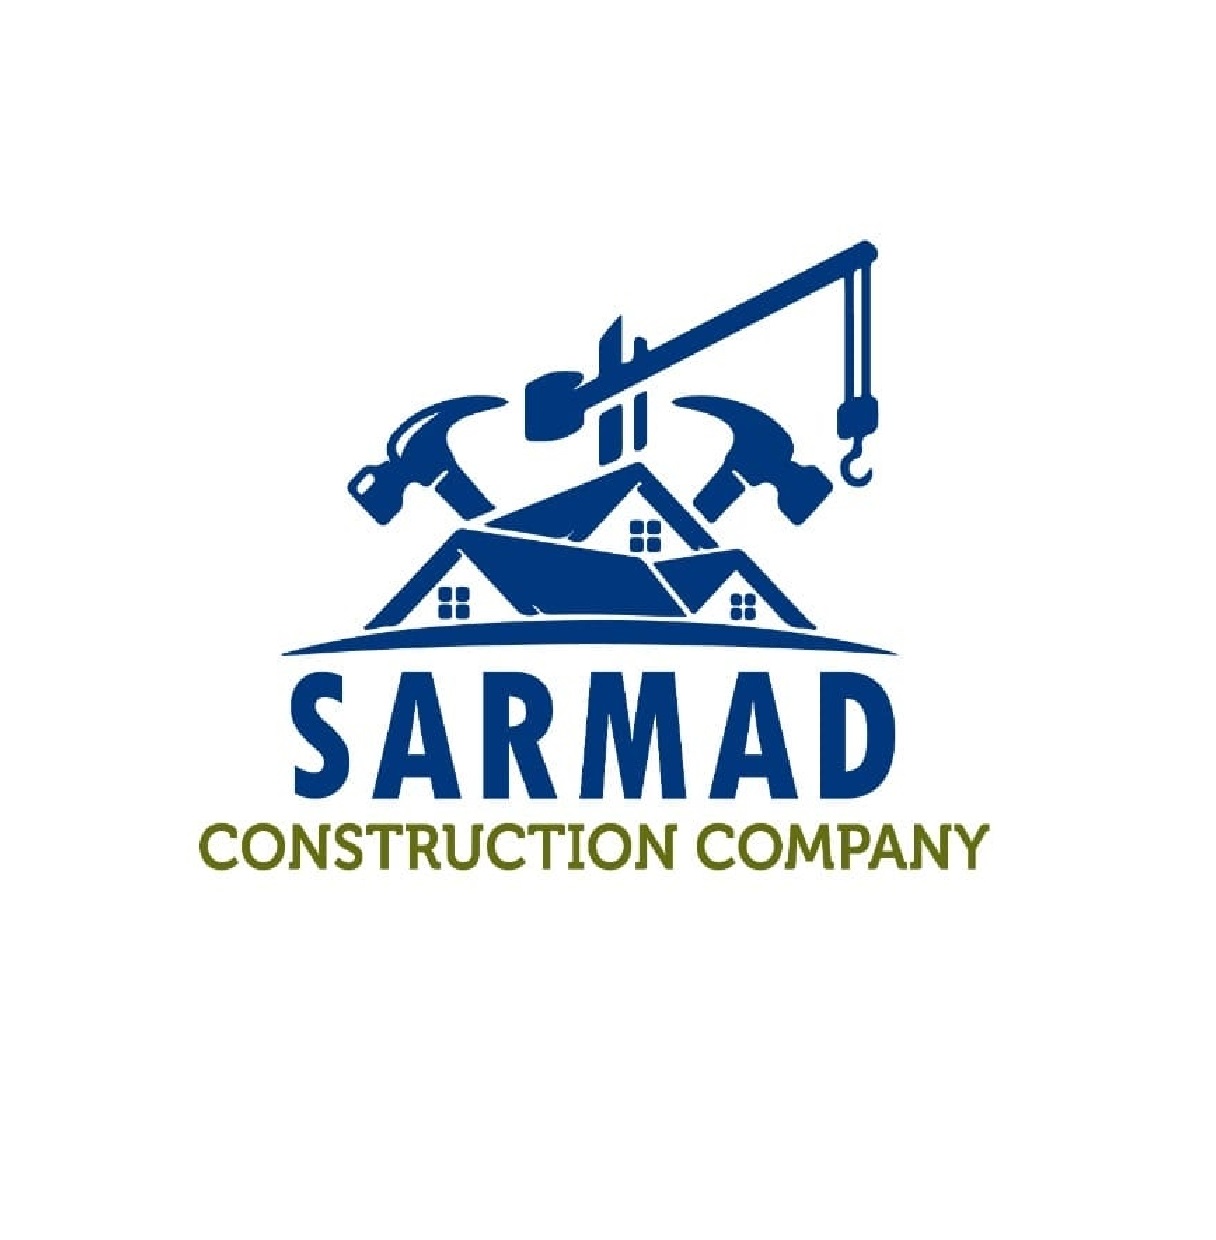 Sarmad company